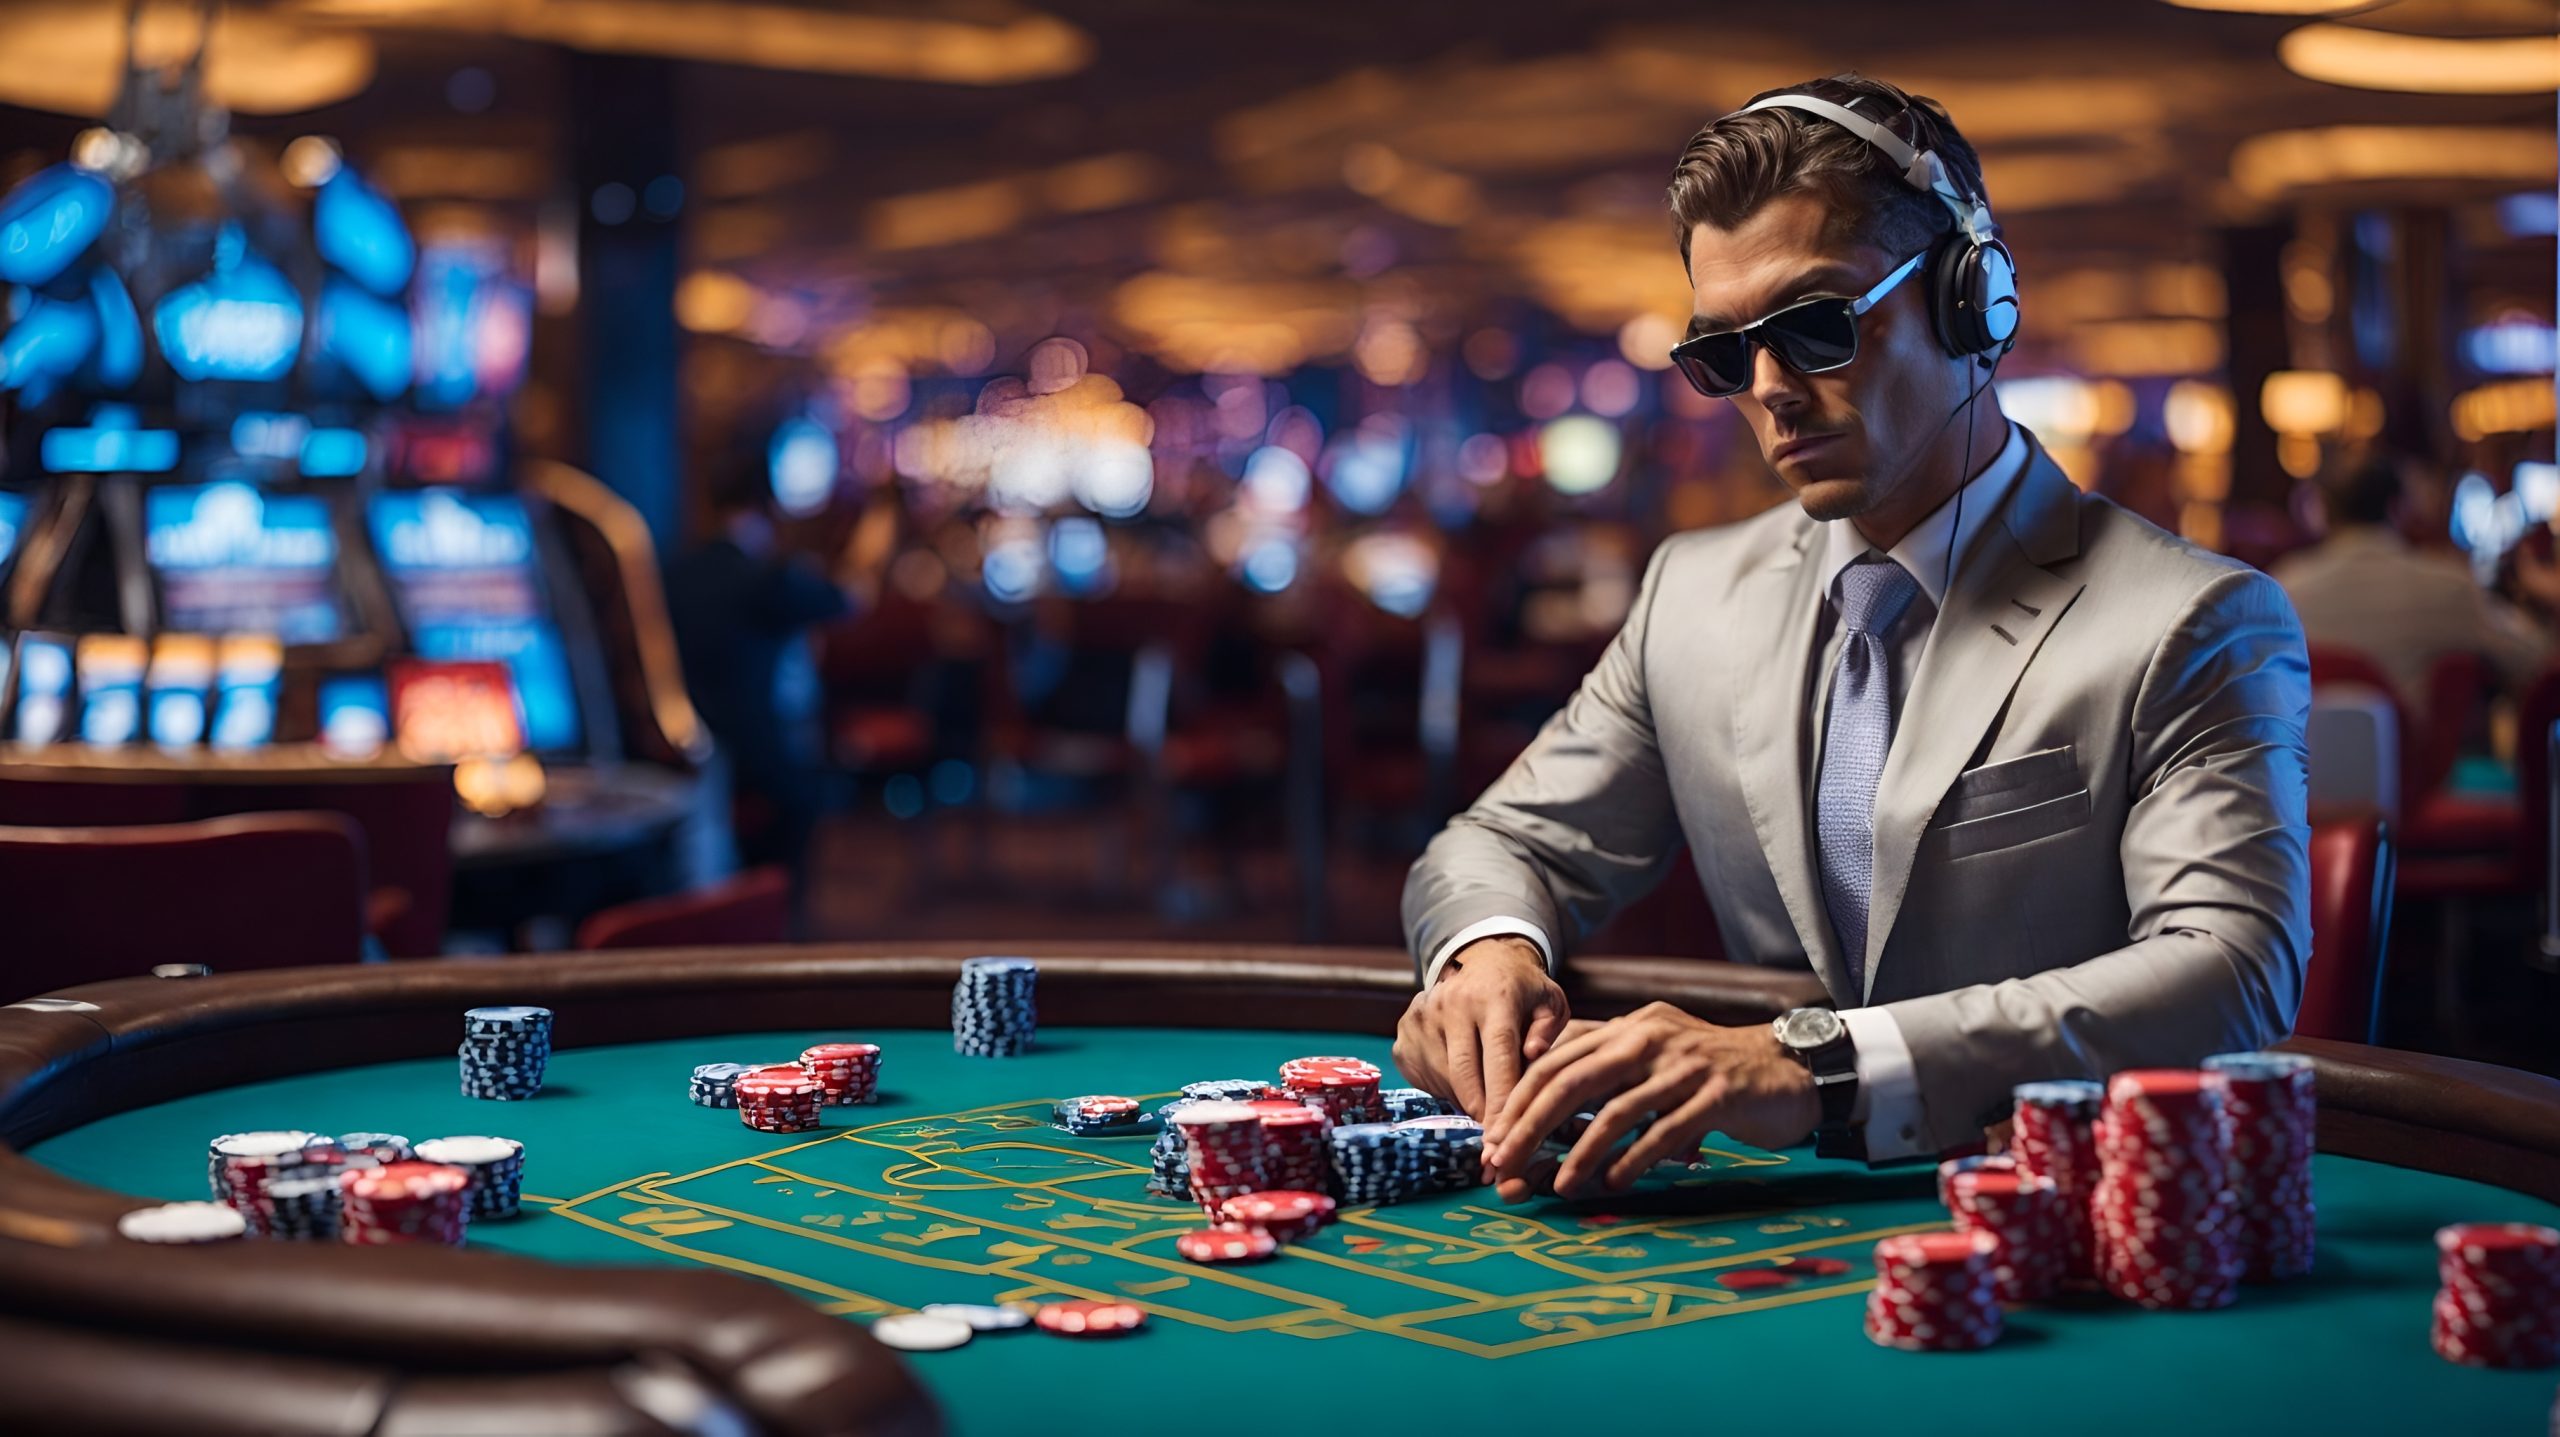 Artificial intelligence is increasingly used in online gambling